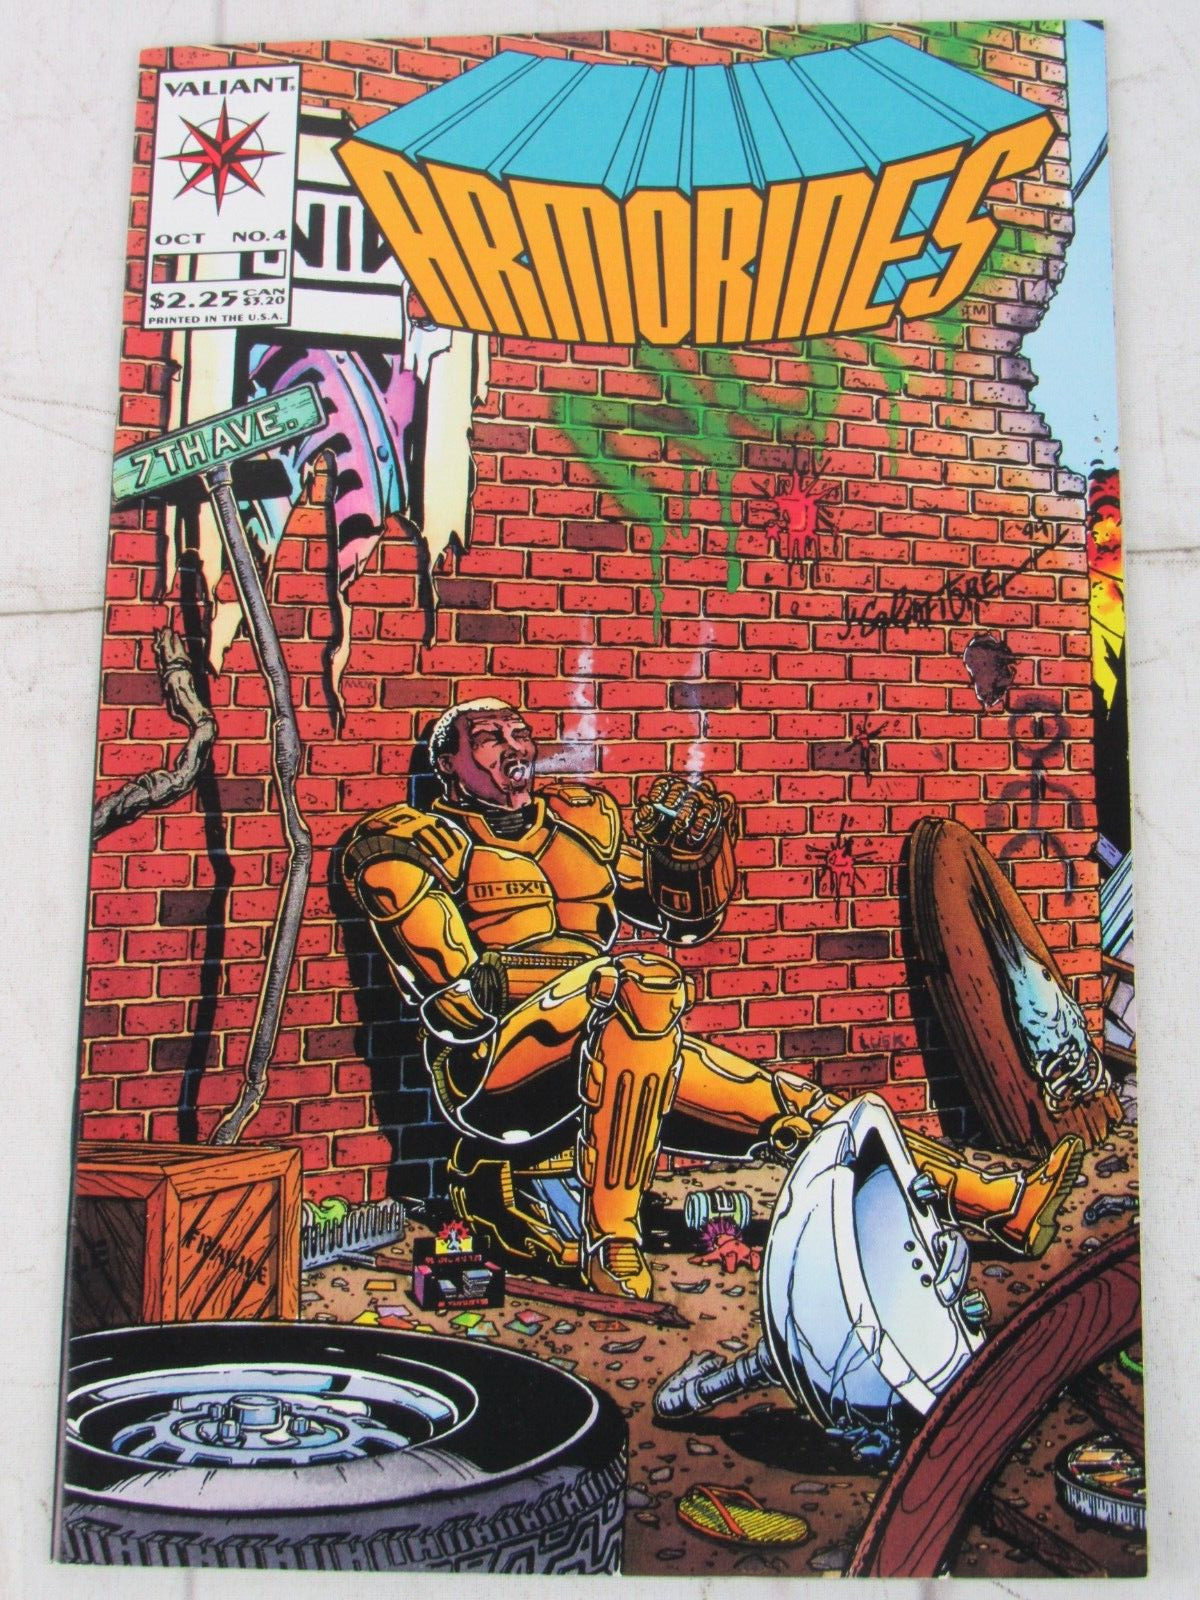 Armorines #4 Oct. 1994 Valiant Comics